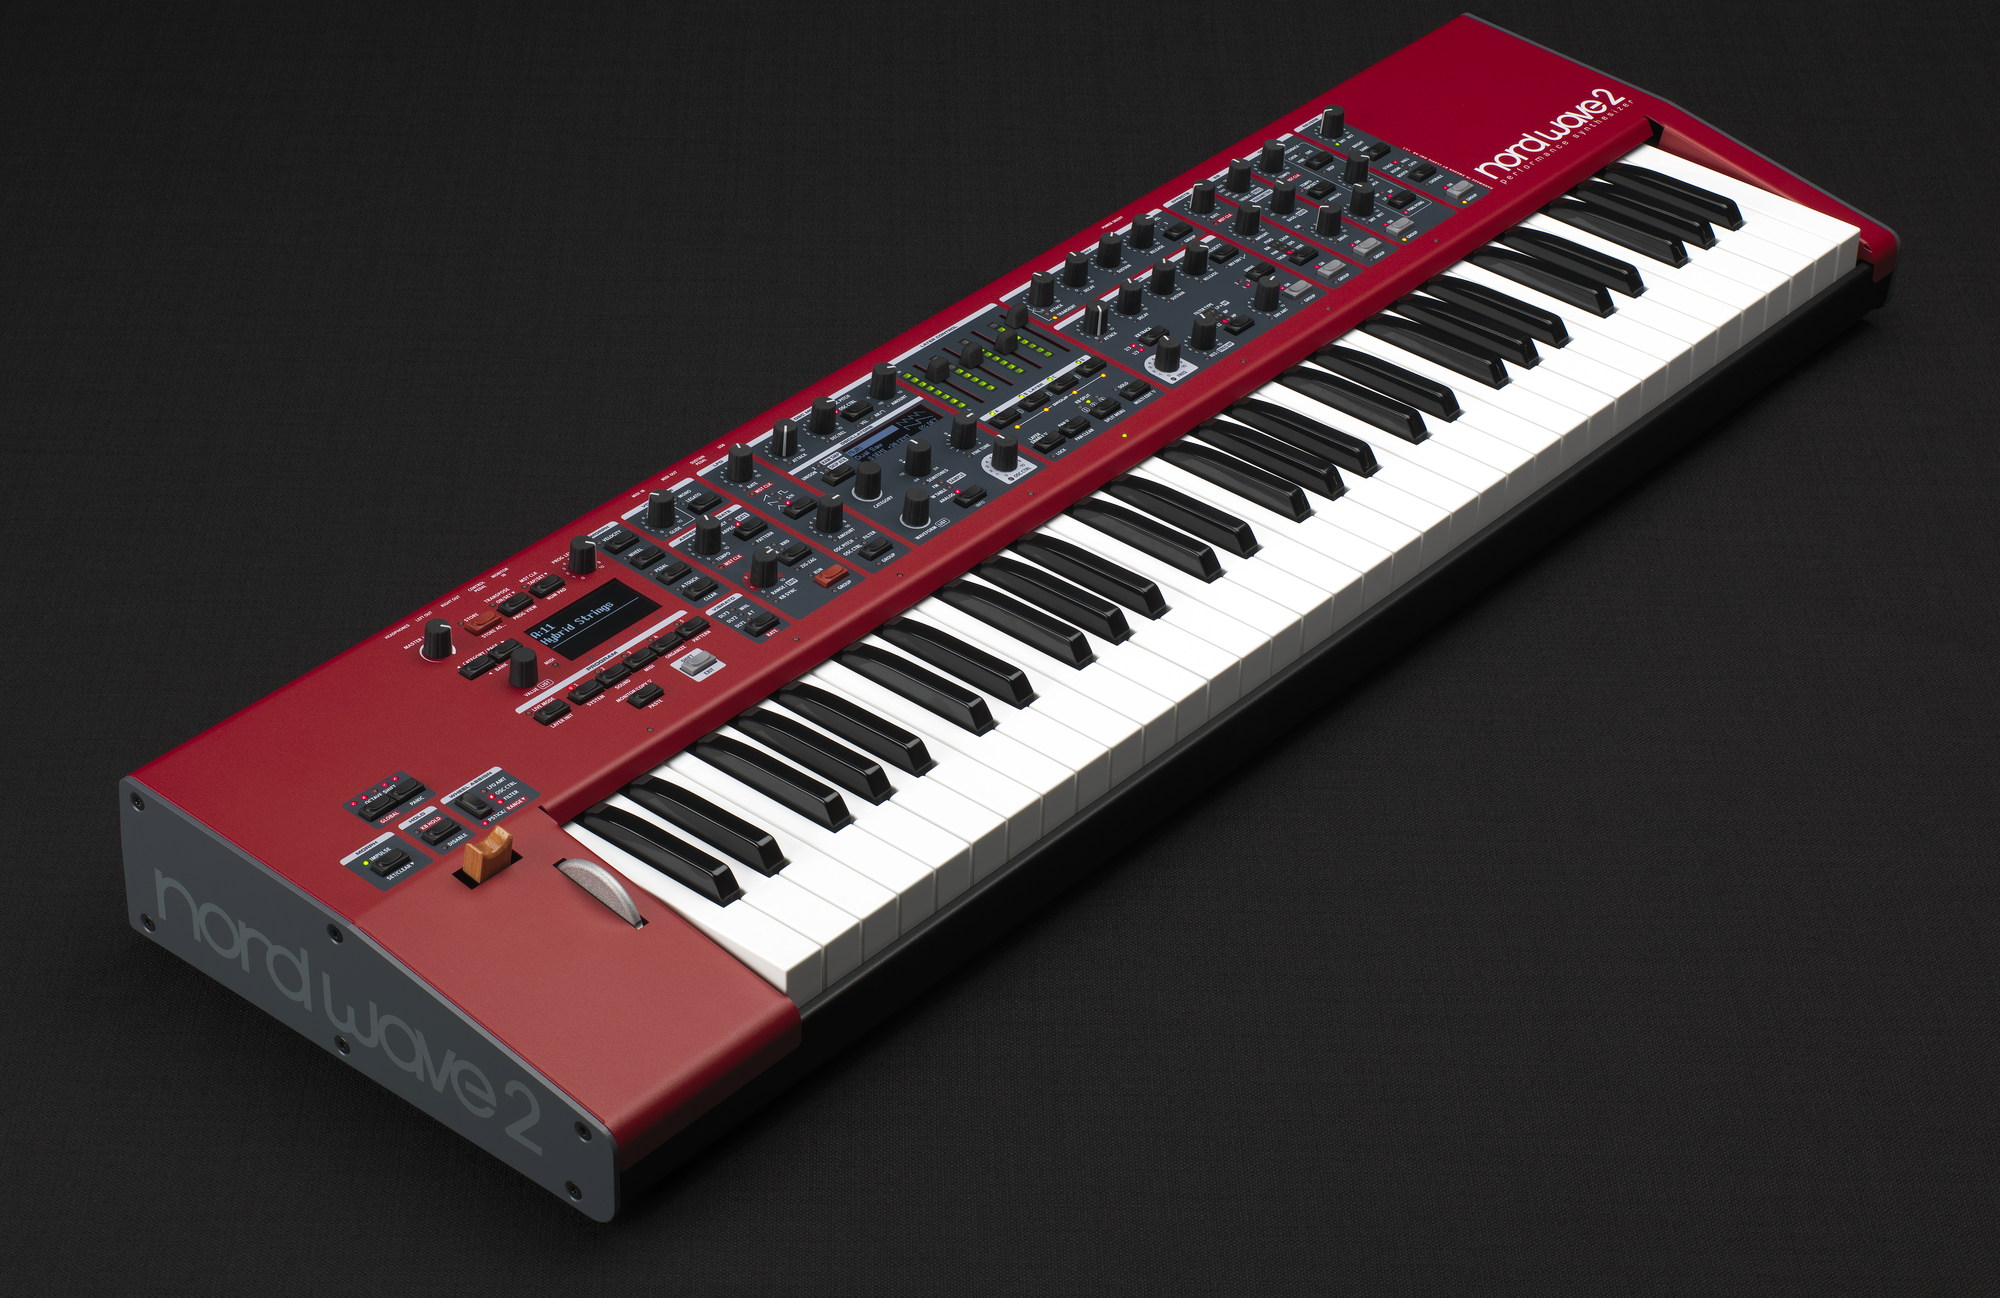 61 keyboard 4-part synthesizer